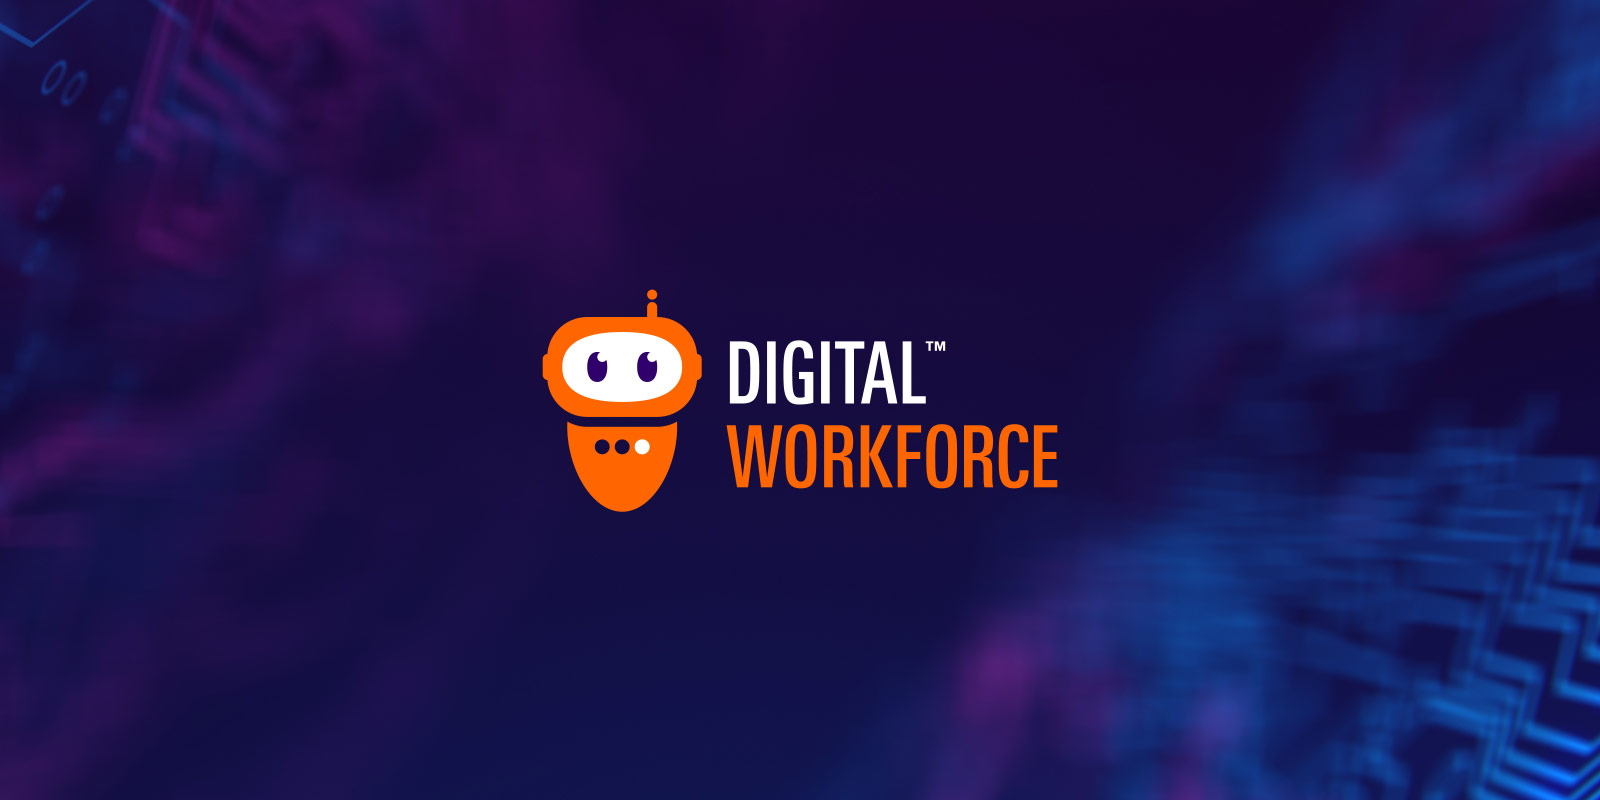 Edge Tech delivers global hires for Digital Workforce